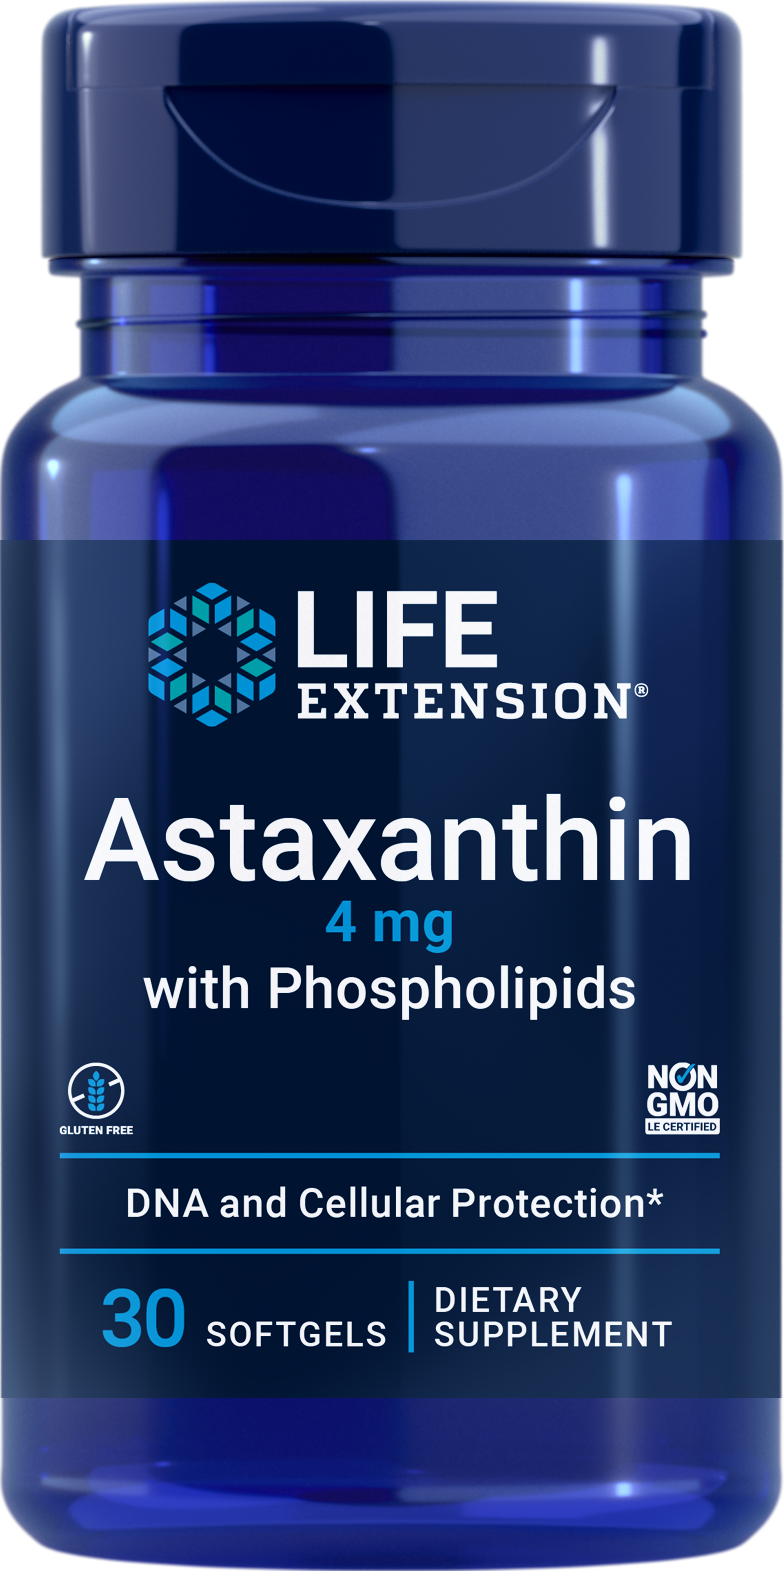 Astaxanthin with Phospholipids